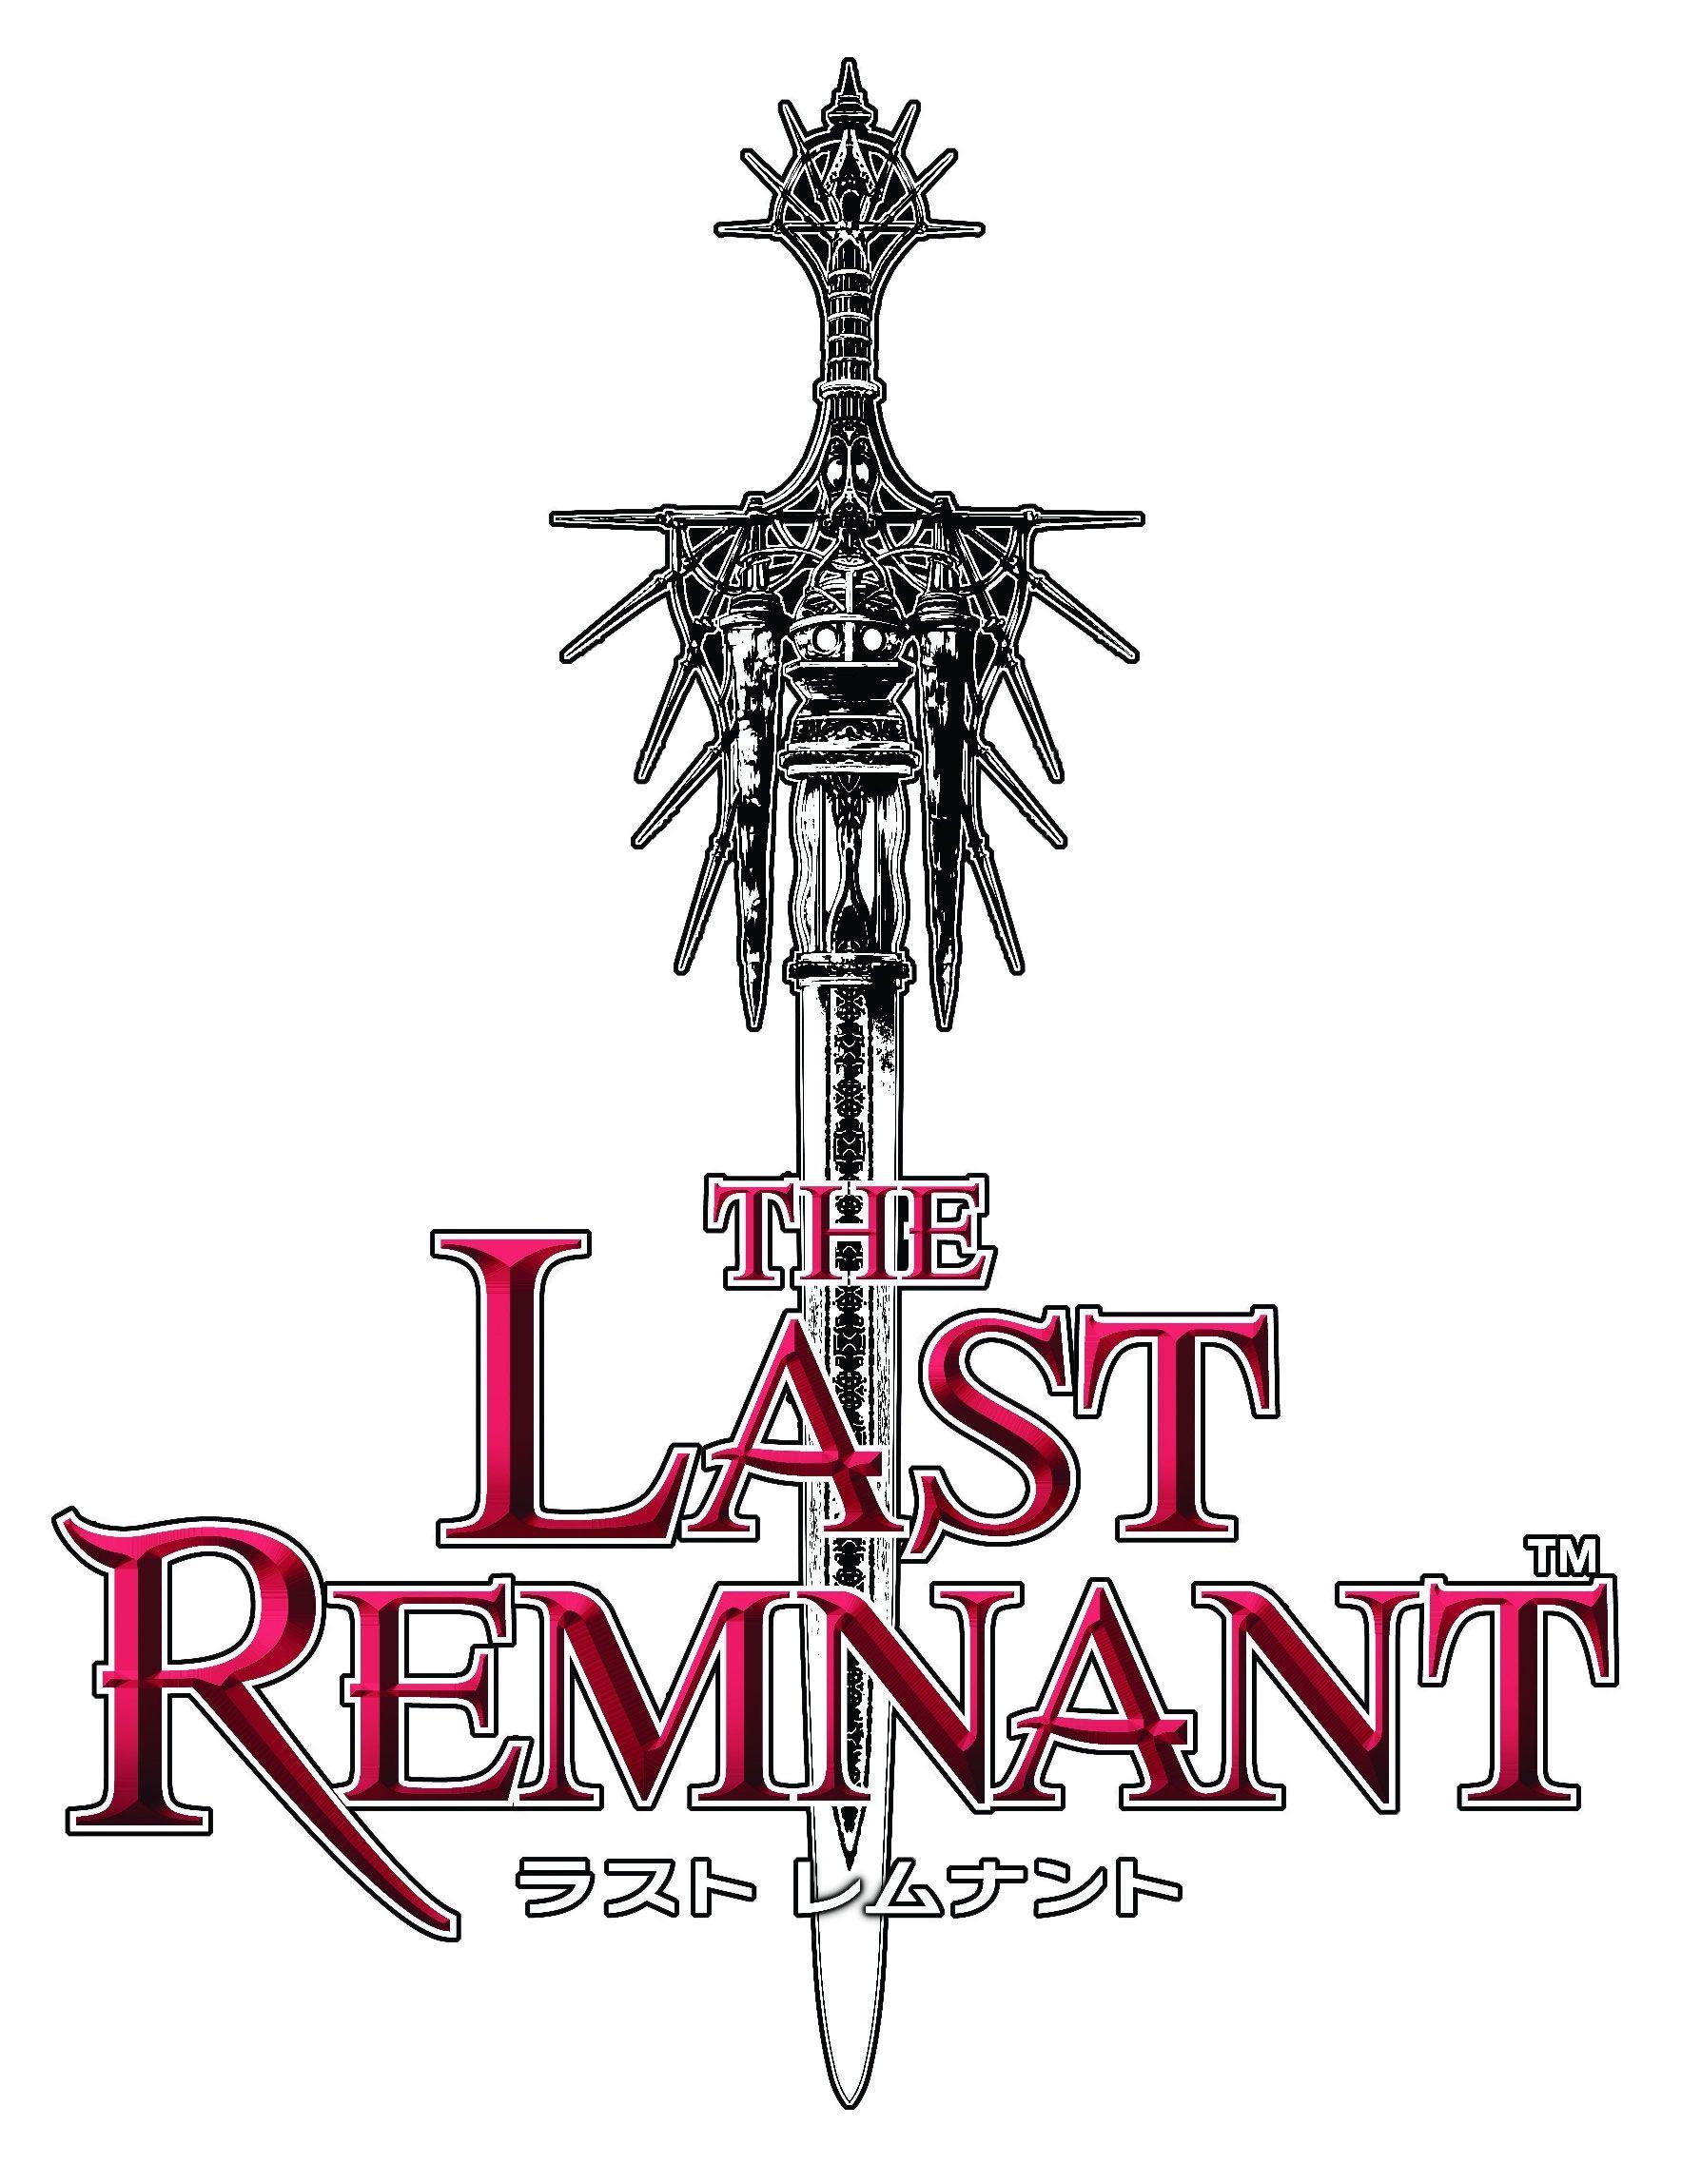 Remnant Logo - Index Of Games 360 The Last Remnant Index